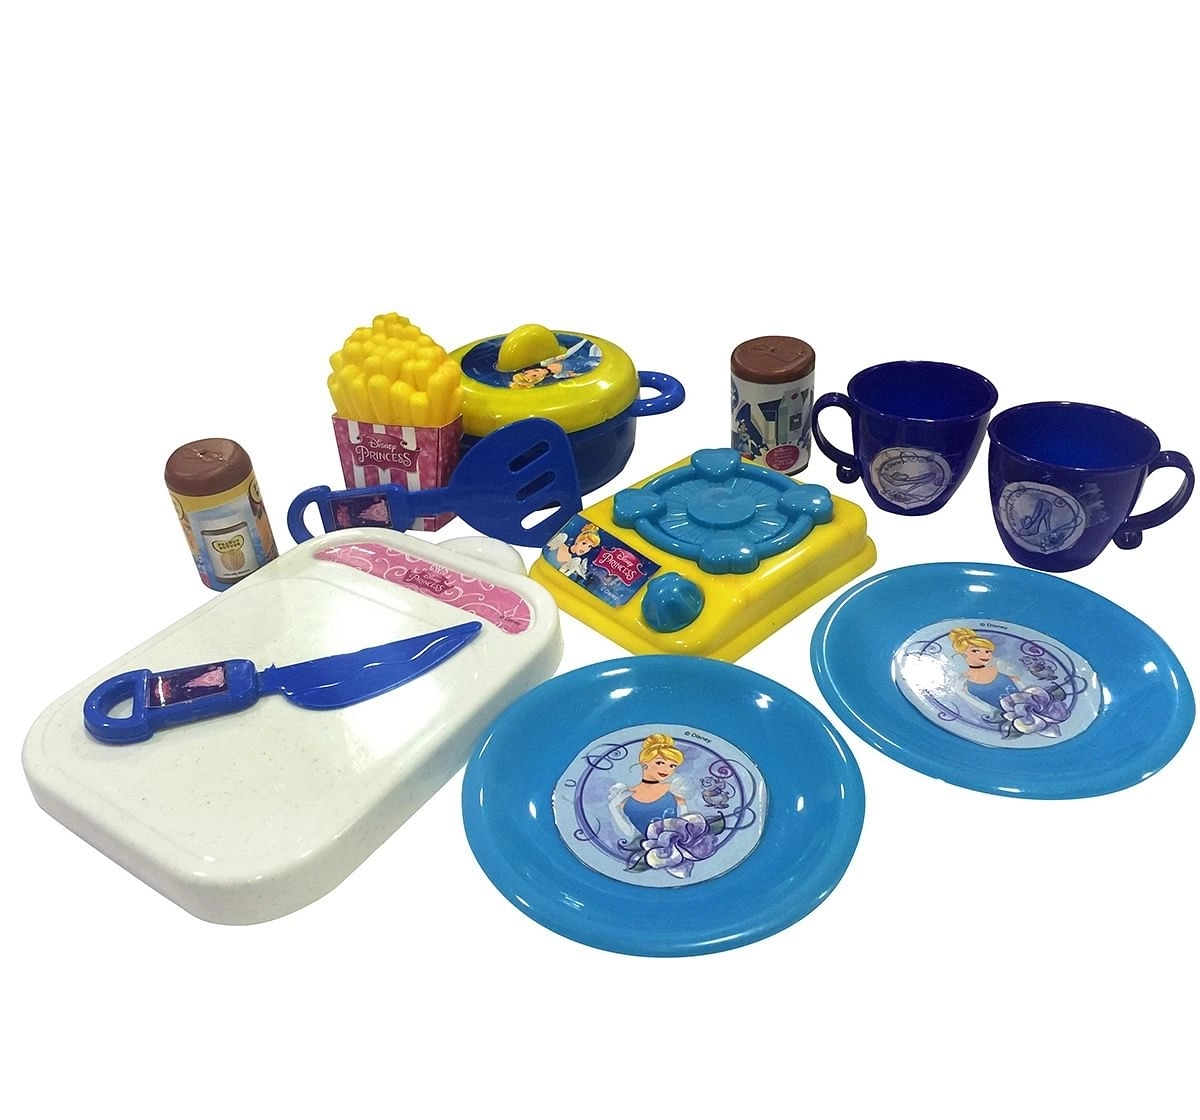 IToys Disney Kitchen Set - Assorted Kitchen Sets & Appliances for Kids Age 3Y+